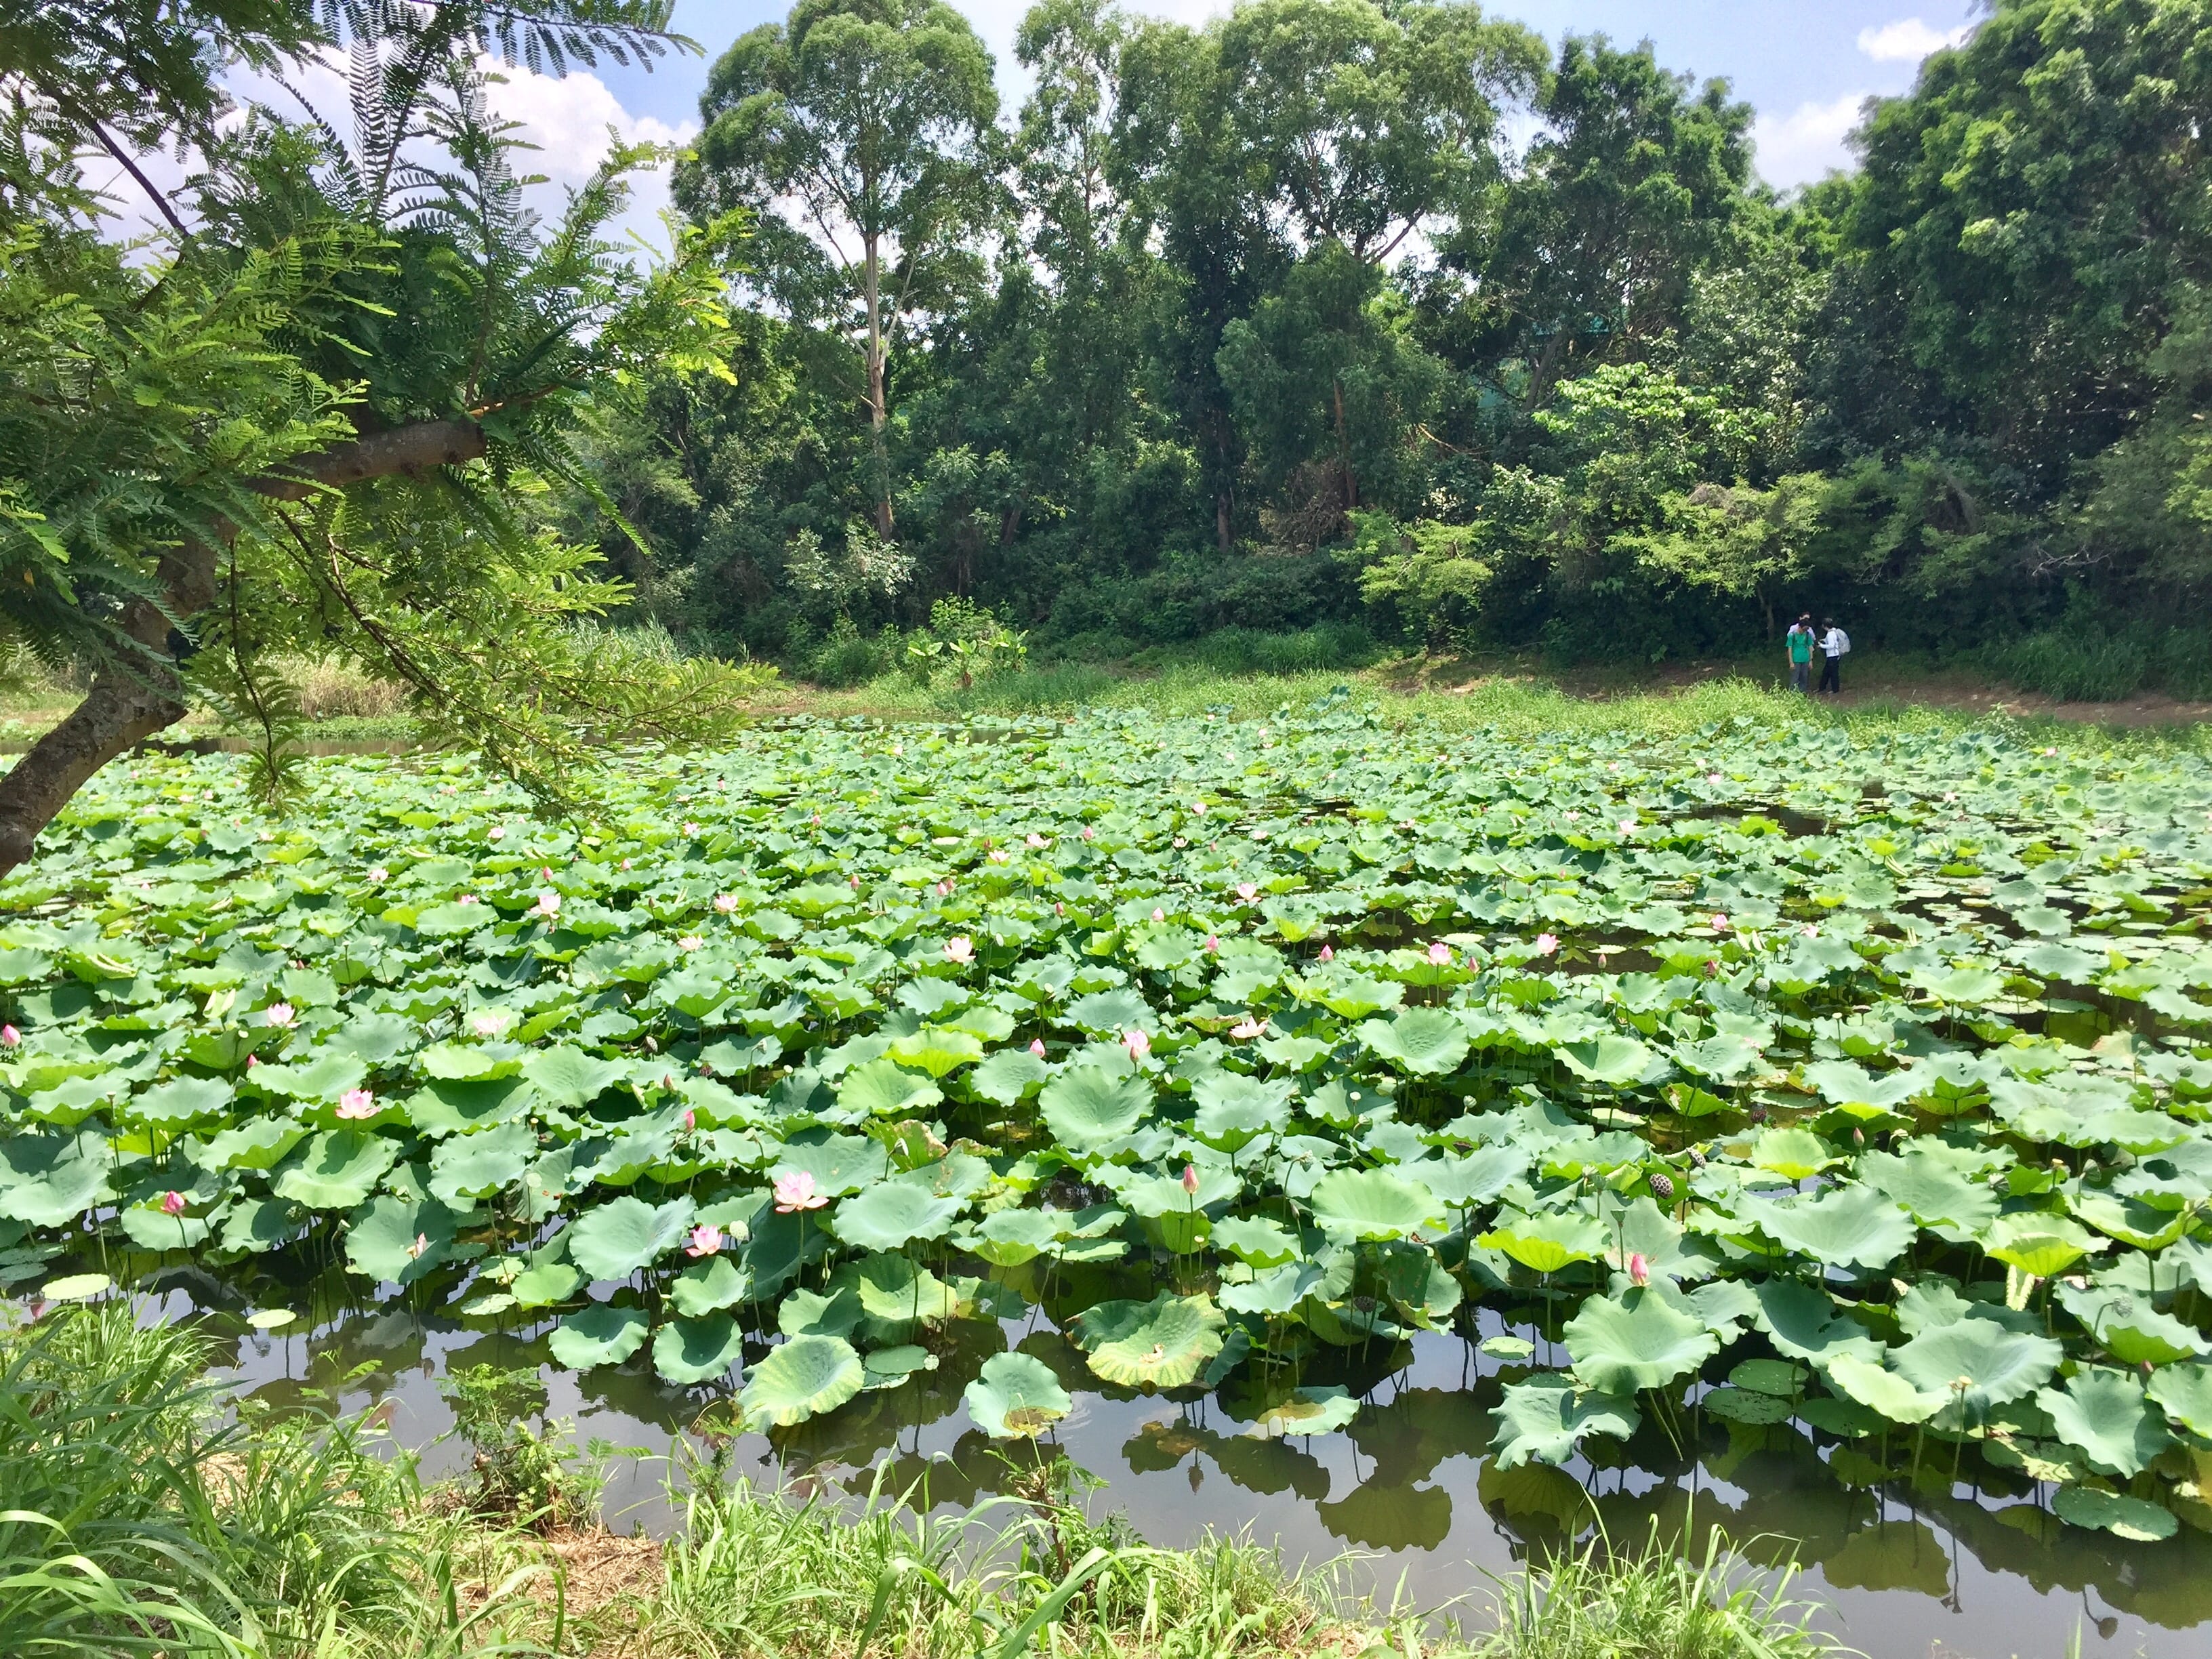 A large Lotus Pond